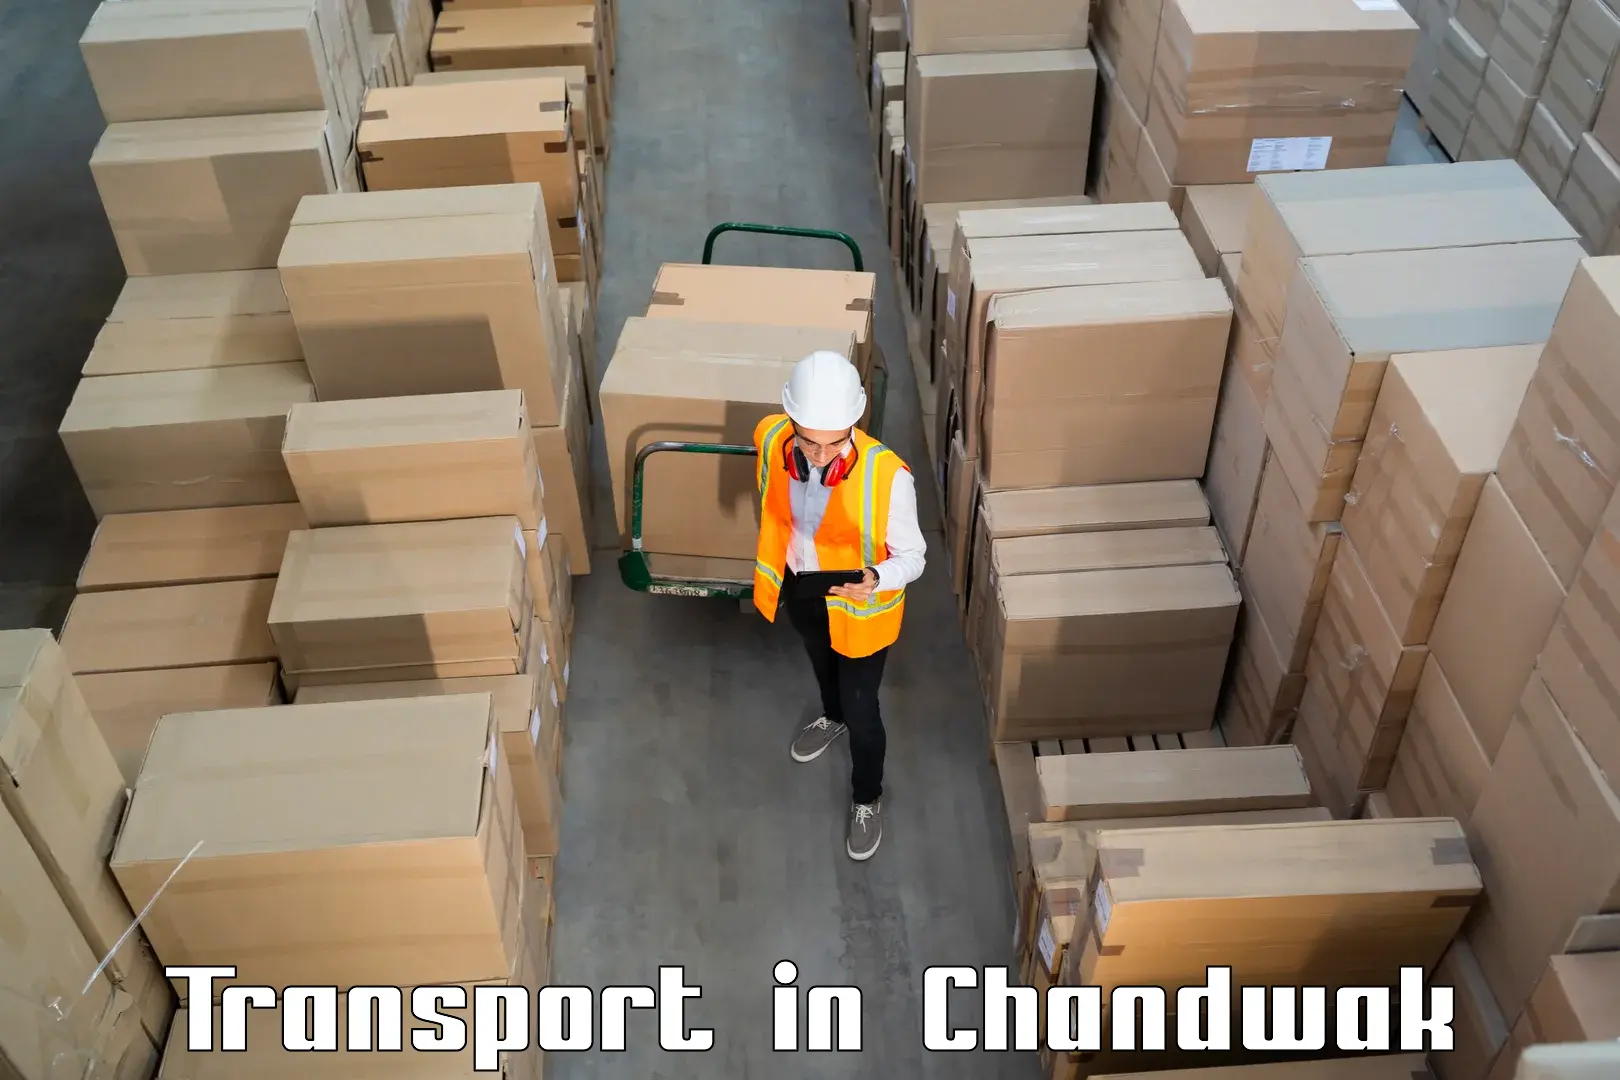 Furniture transport service in Chandwak